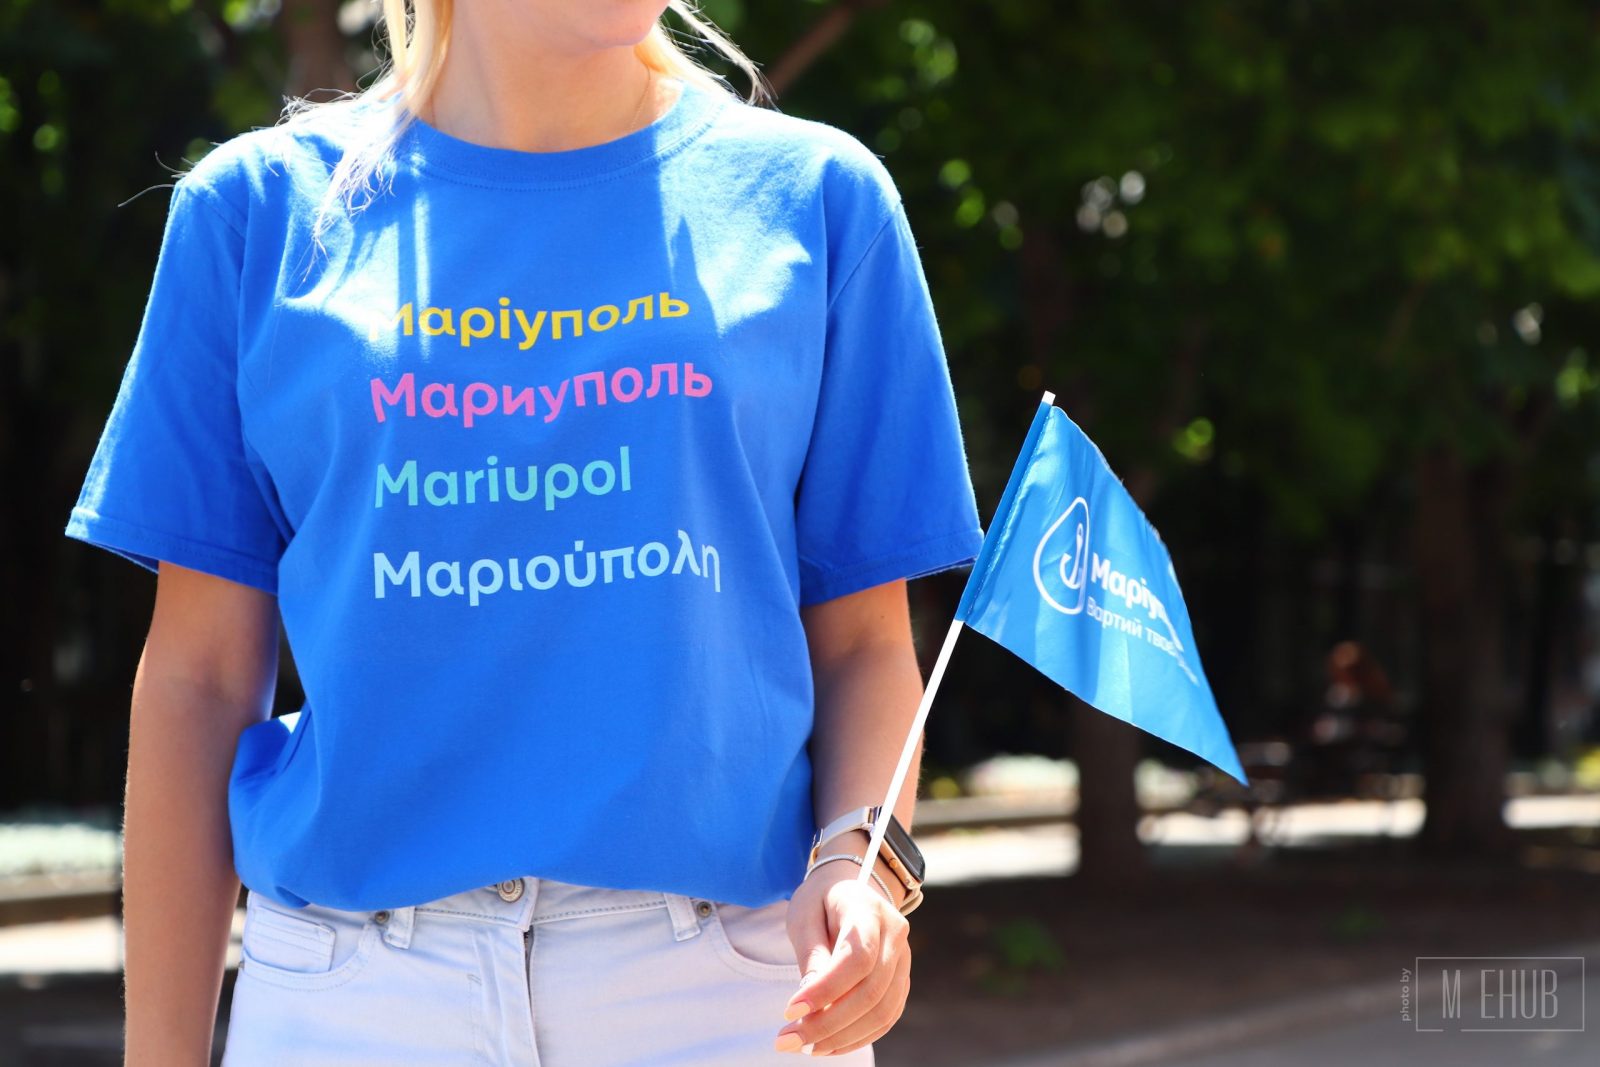 Mariupol is a tourist city • T-shirt "Mariupol"